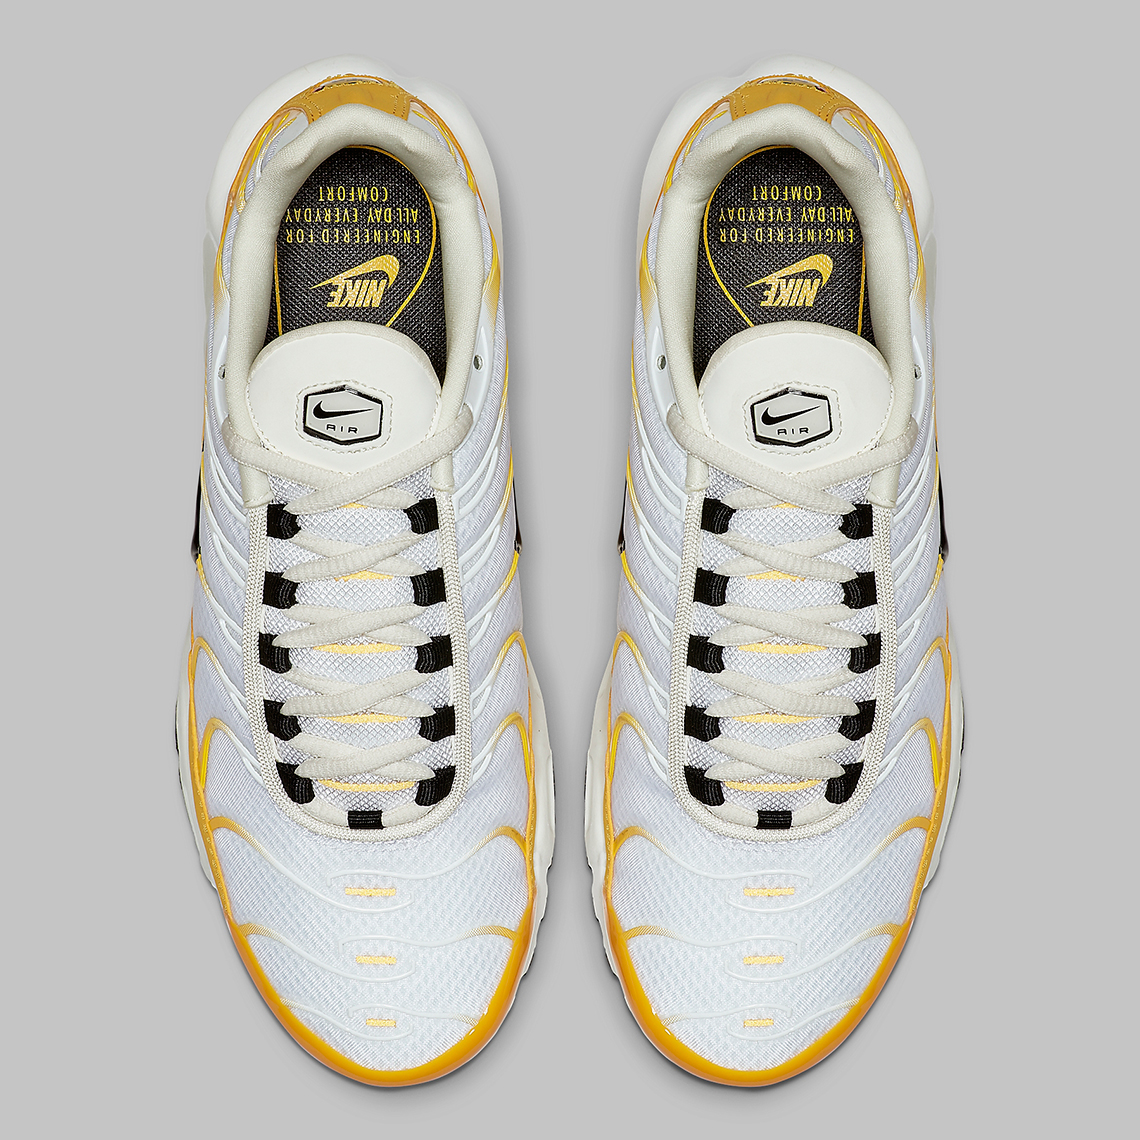 Nike Air Max Plus White Black Yellow Wu Tang Cd7061 700 3